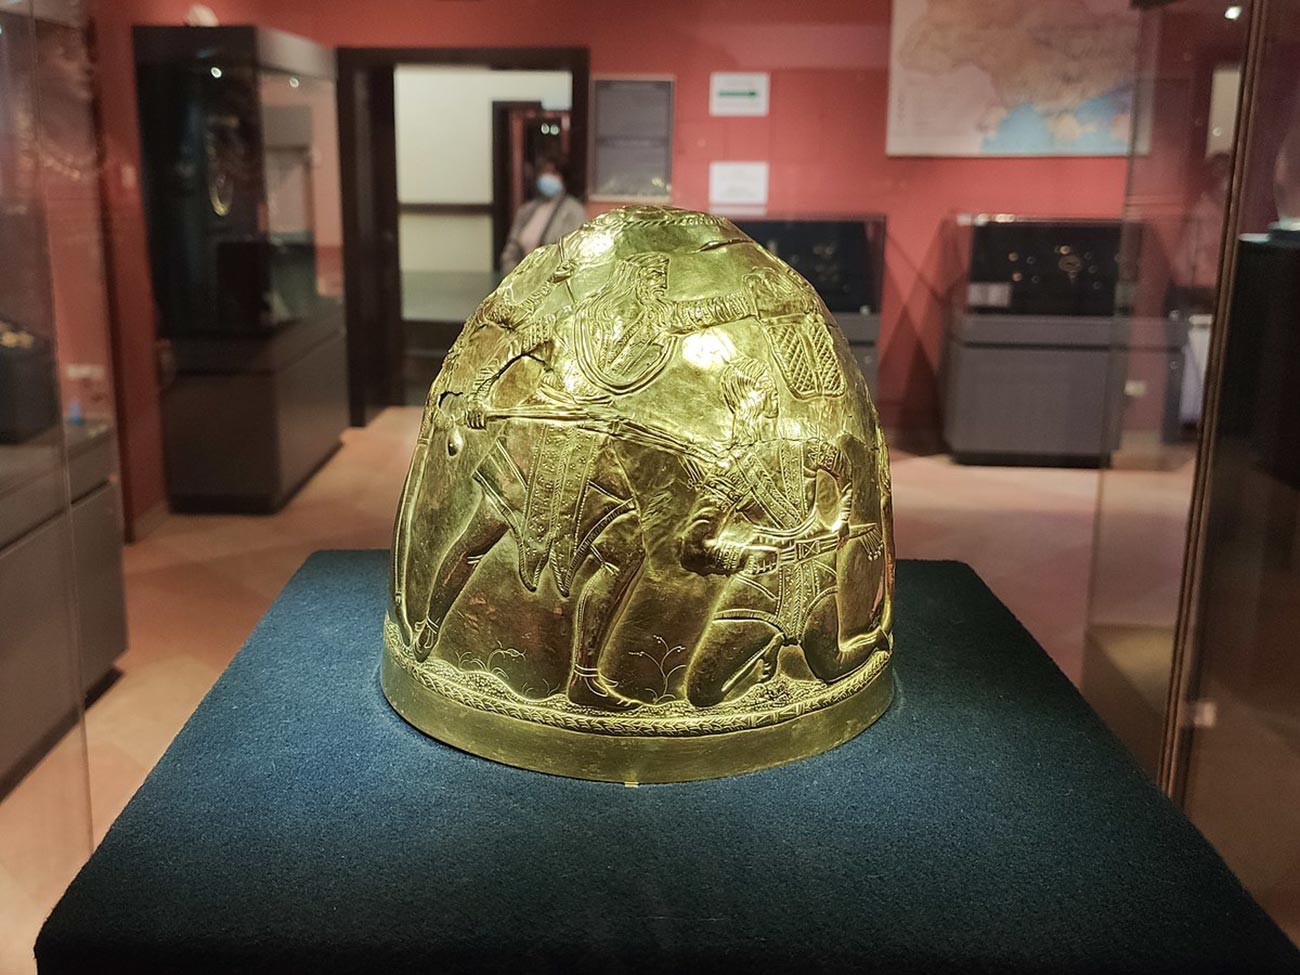 Casco de oro ceremonial de un gobernante escita. Siglo IV a.C. Encontrado en 1988 cerca de la aldea de Zrubne, provincia de Donetsk, Ucrania.